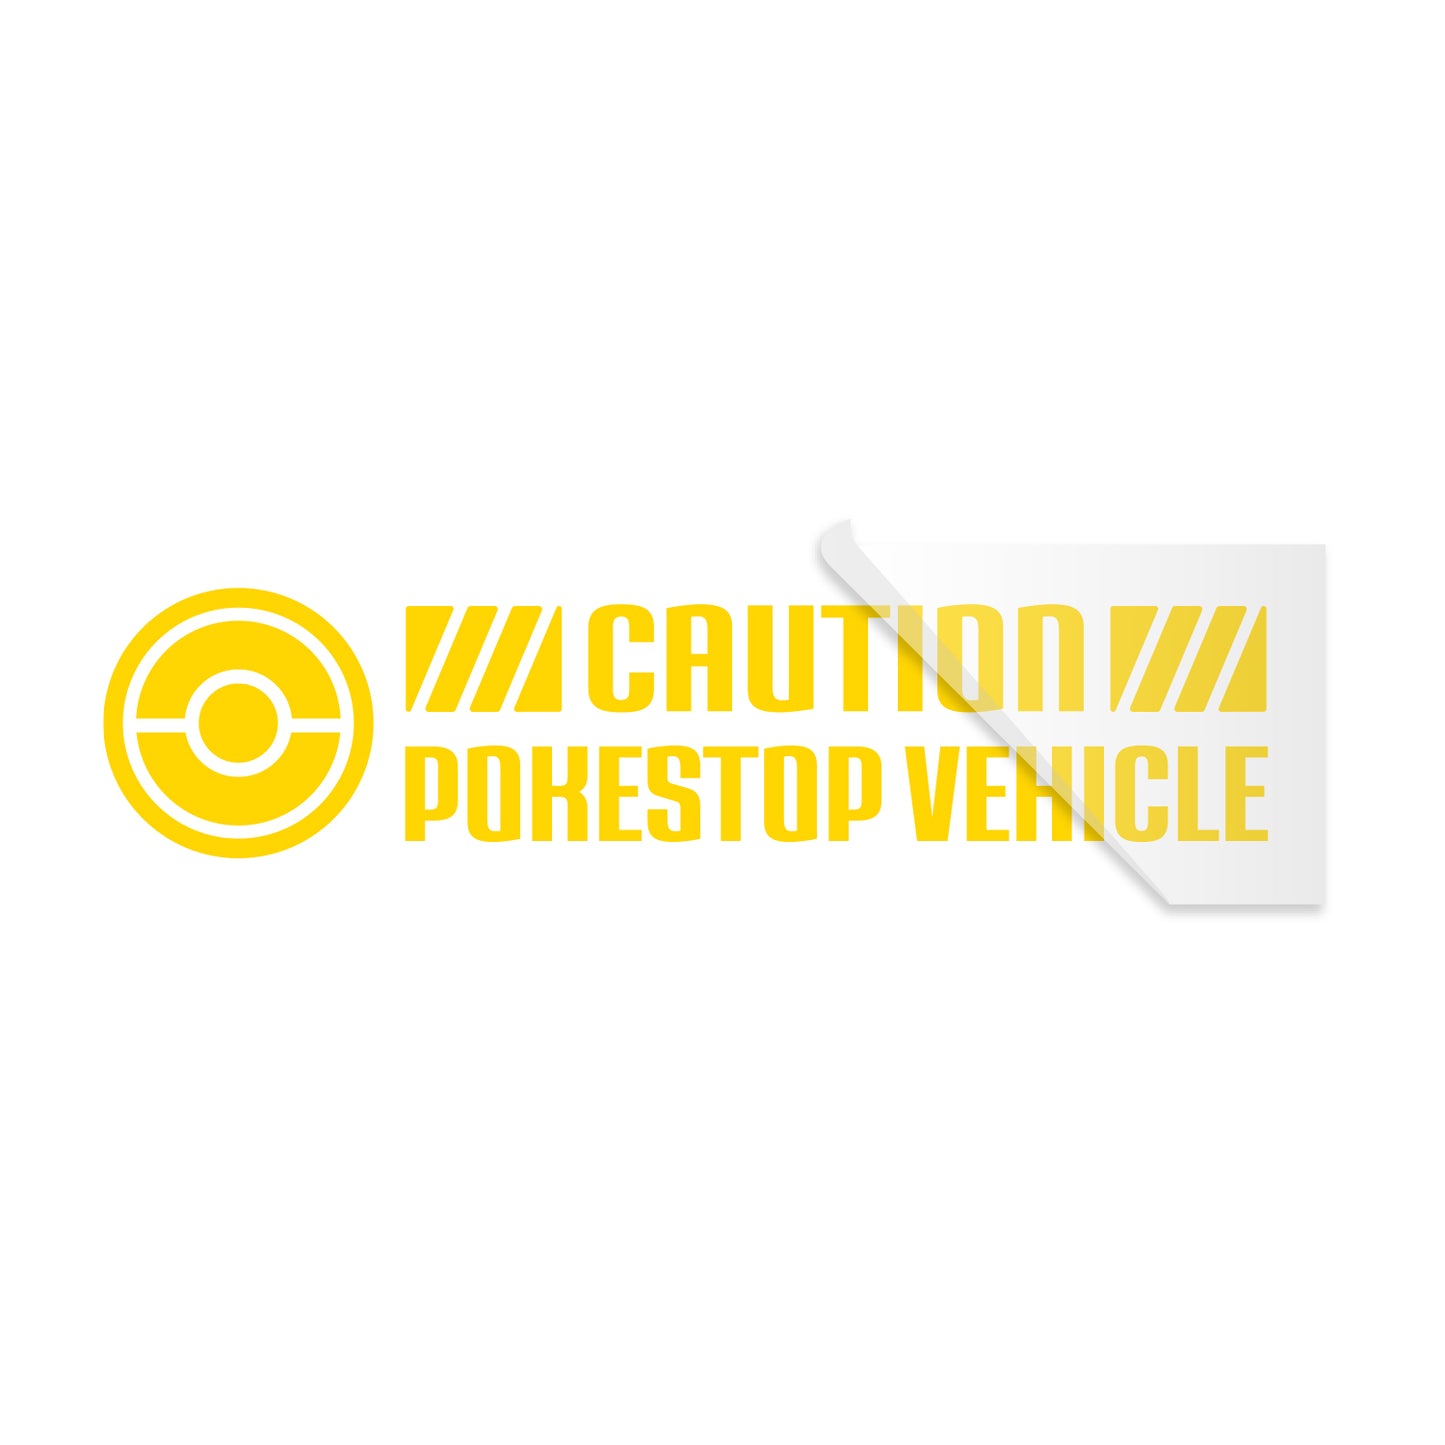 Pogo Caution PokeStop Vehicle V2 Decal